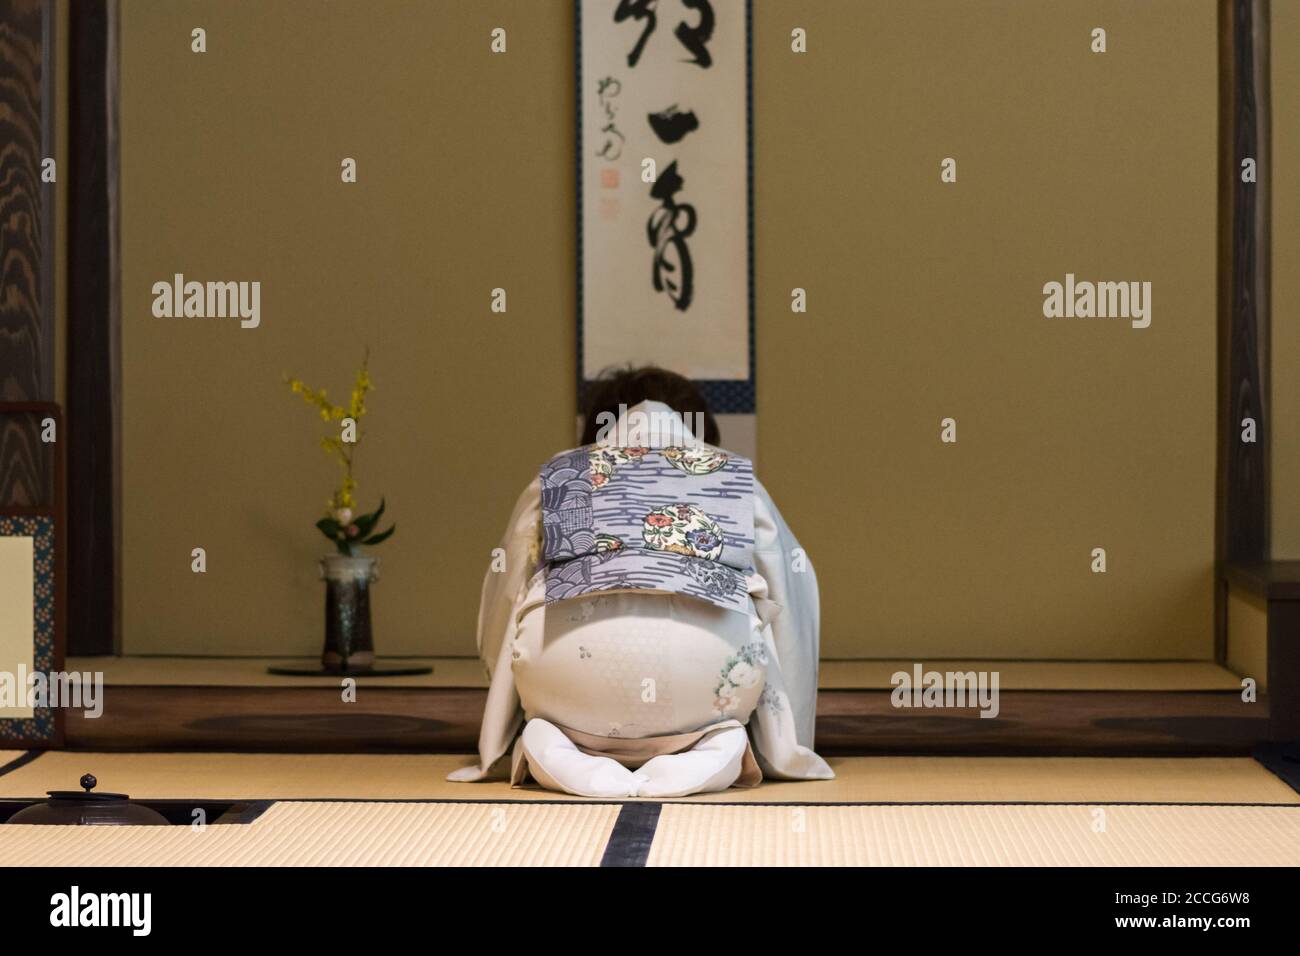 Sakai, Osaka / Japan - February 16, 2018: Japanese tea ceremony master during ceremonial preparation and presentation of powdered green tea matcha Stock Photo